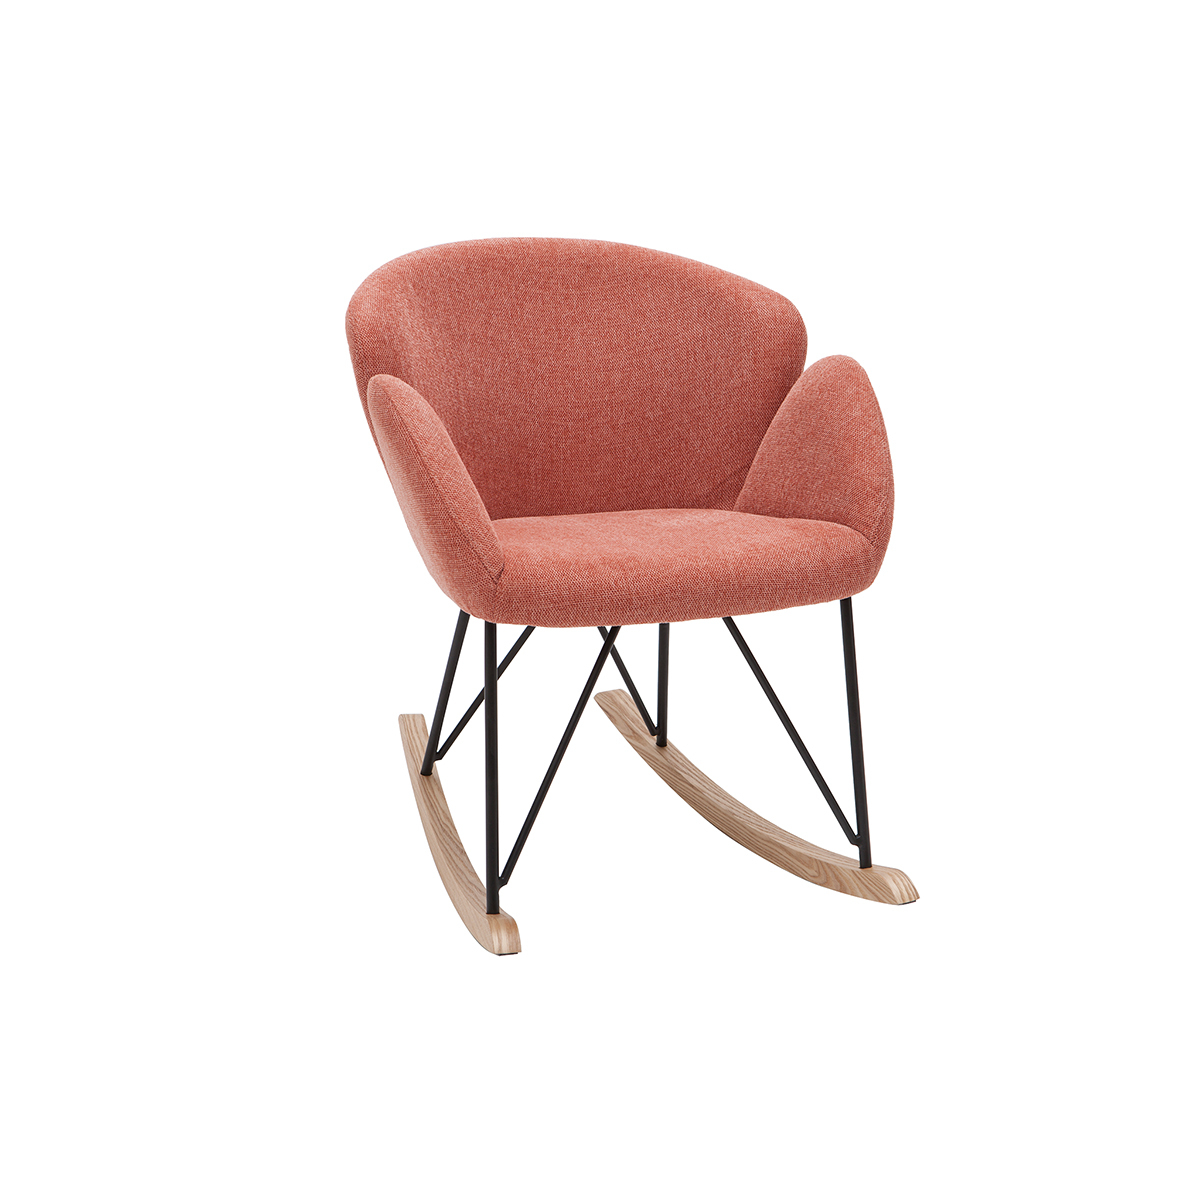 Rocking chair design effet velours texturé terracotta RHAPSODY vue1